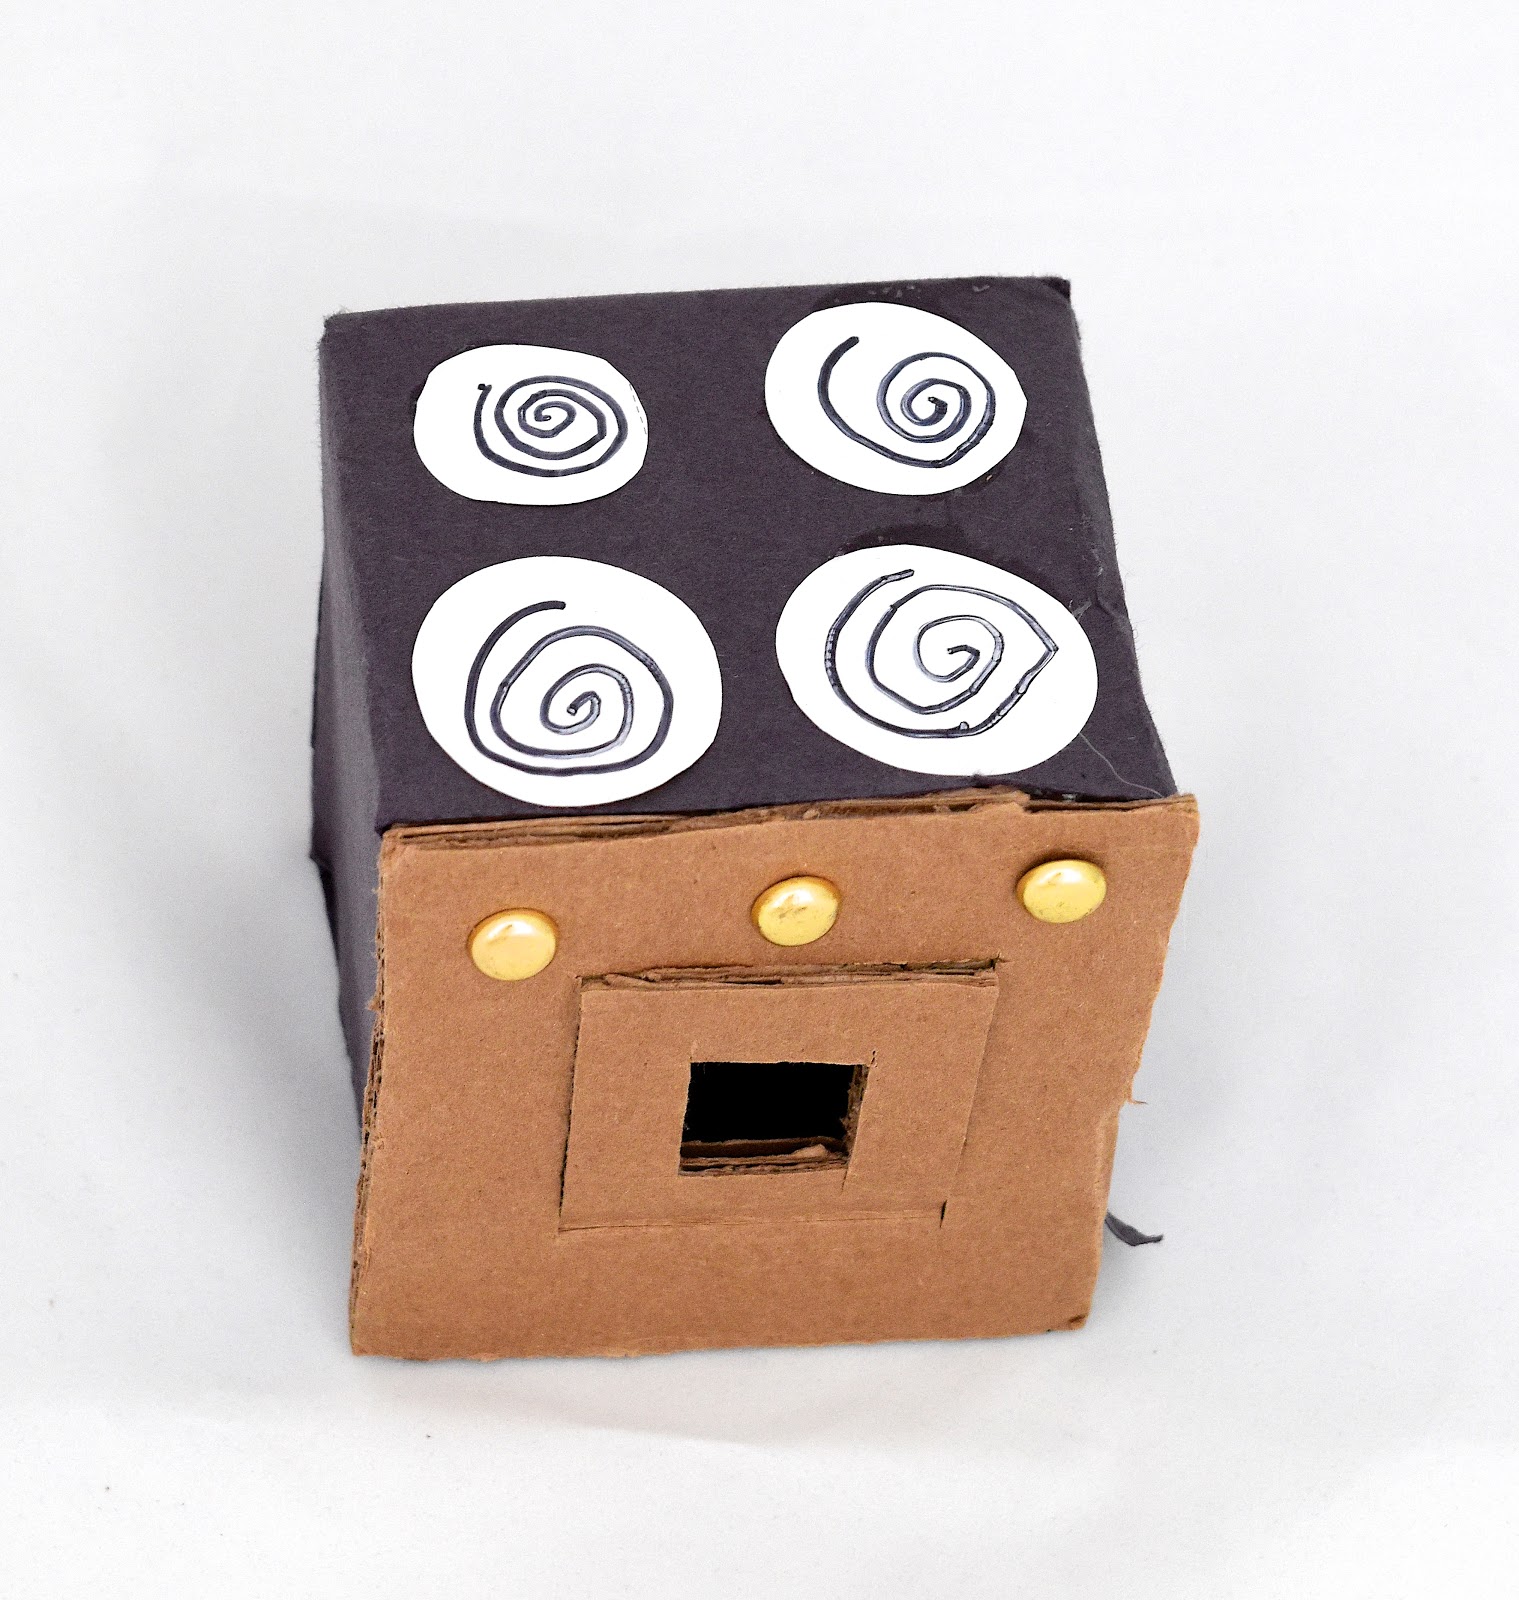 ikat bag: How to Make Kids' Oven Mitts